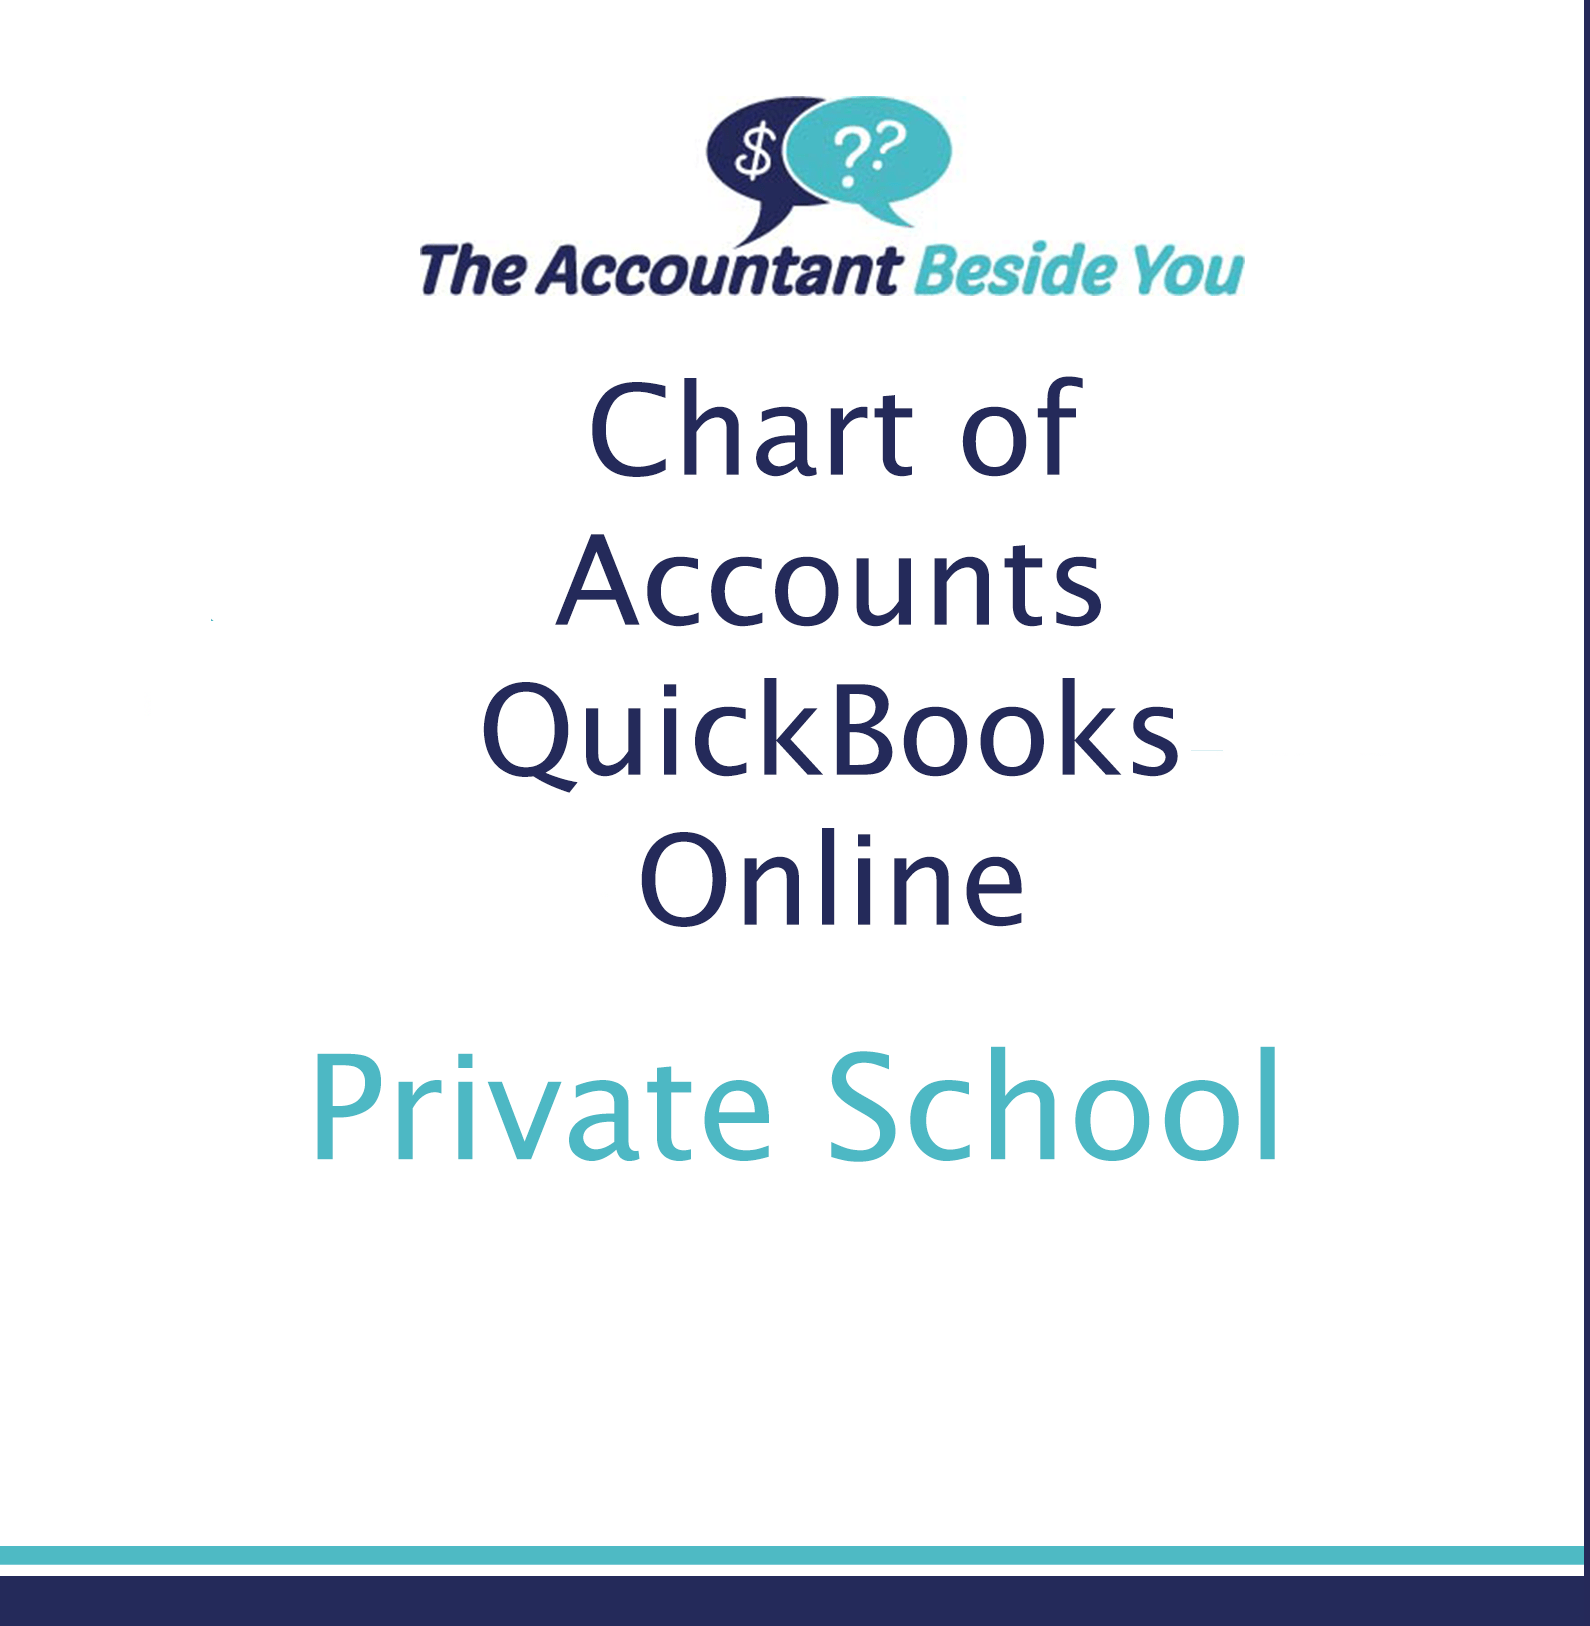 quickbooks for accountants online sample